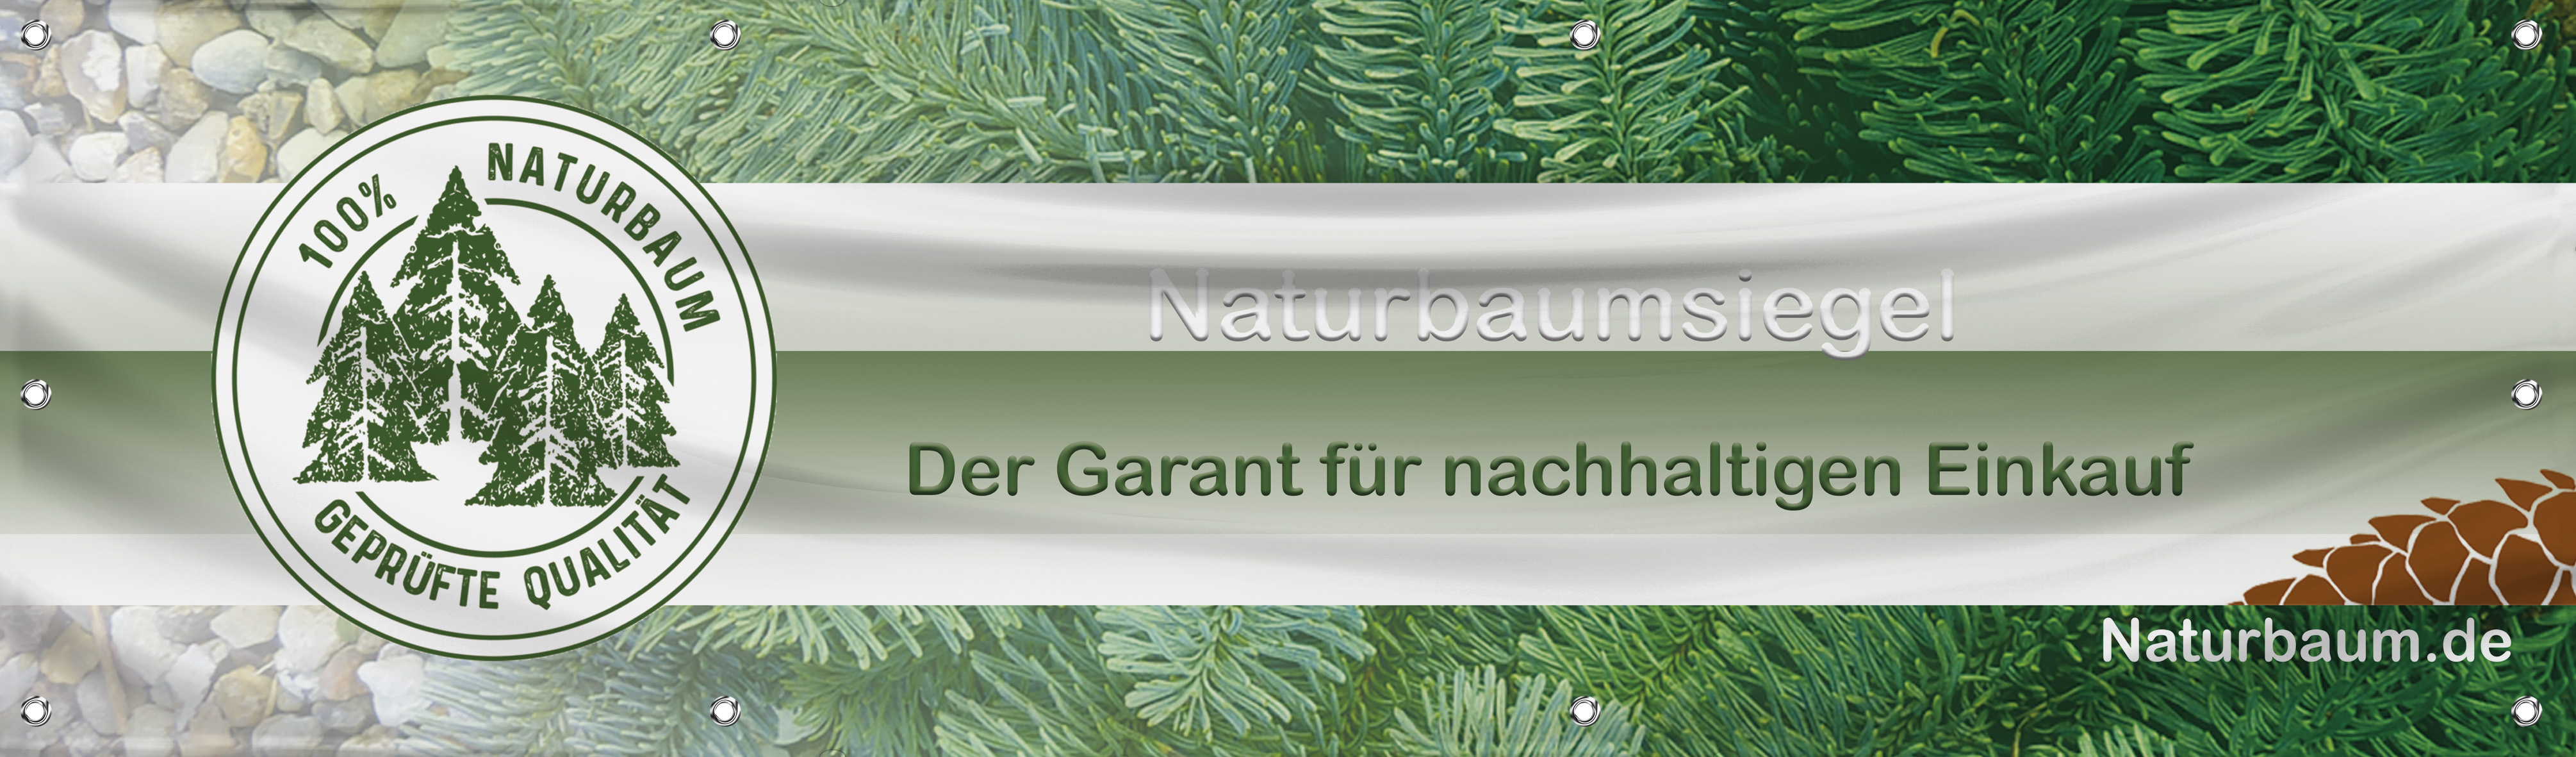 Banner natural tree - 180 x 60 cm, text: german